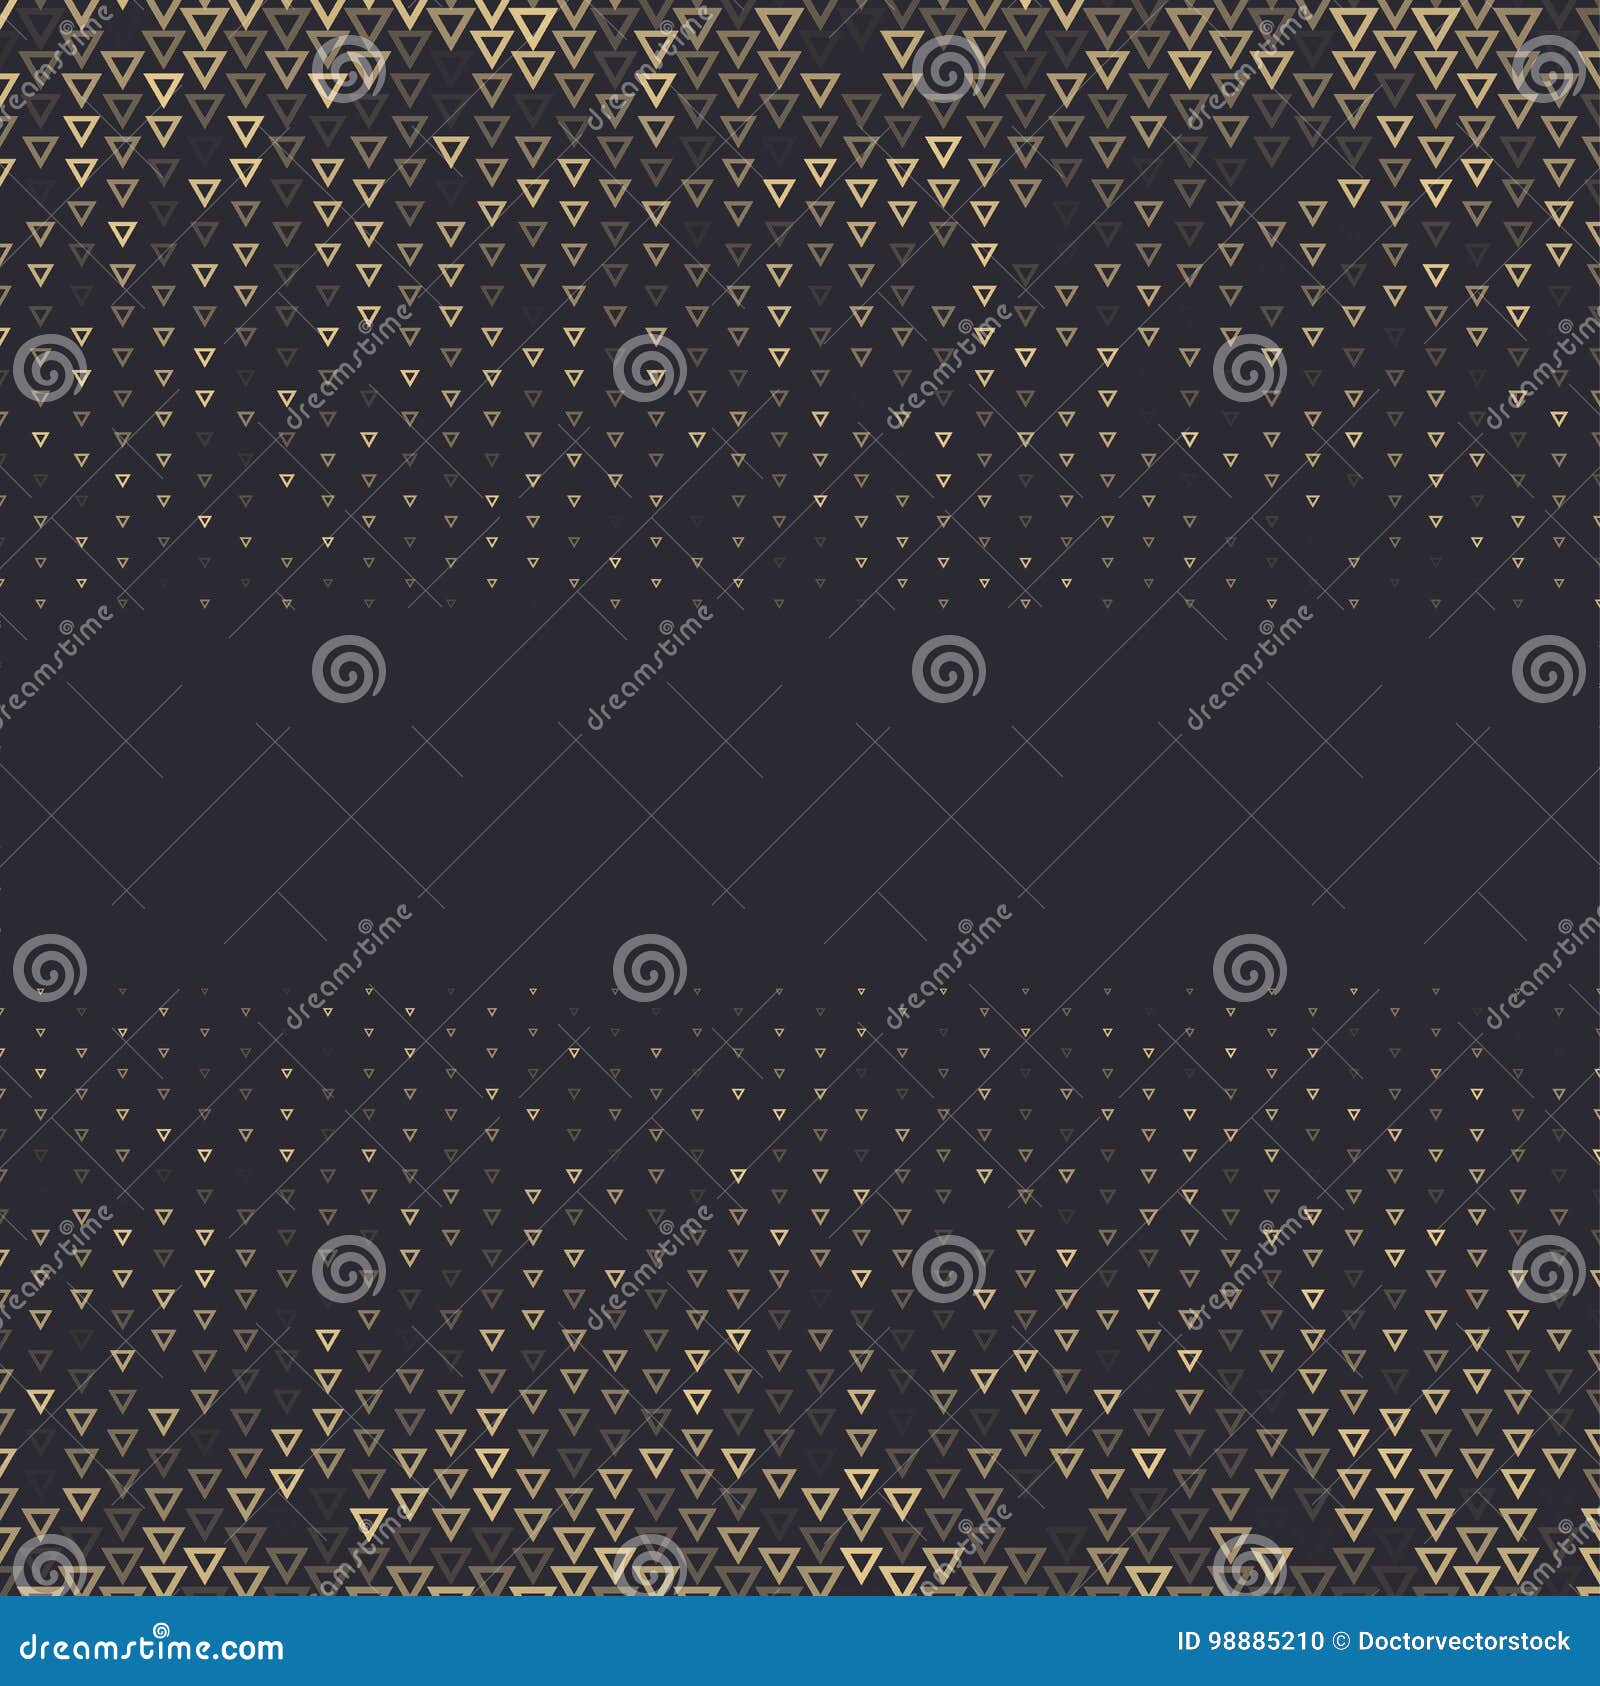  halftone abstract background, black gold gradient gradation. geometric mosaic triangle s monochrome pattern